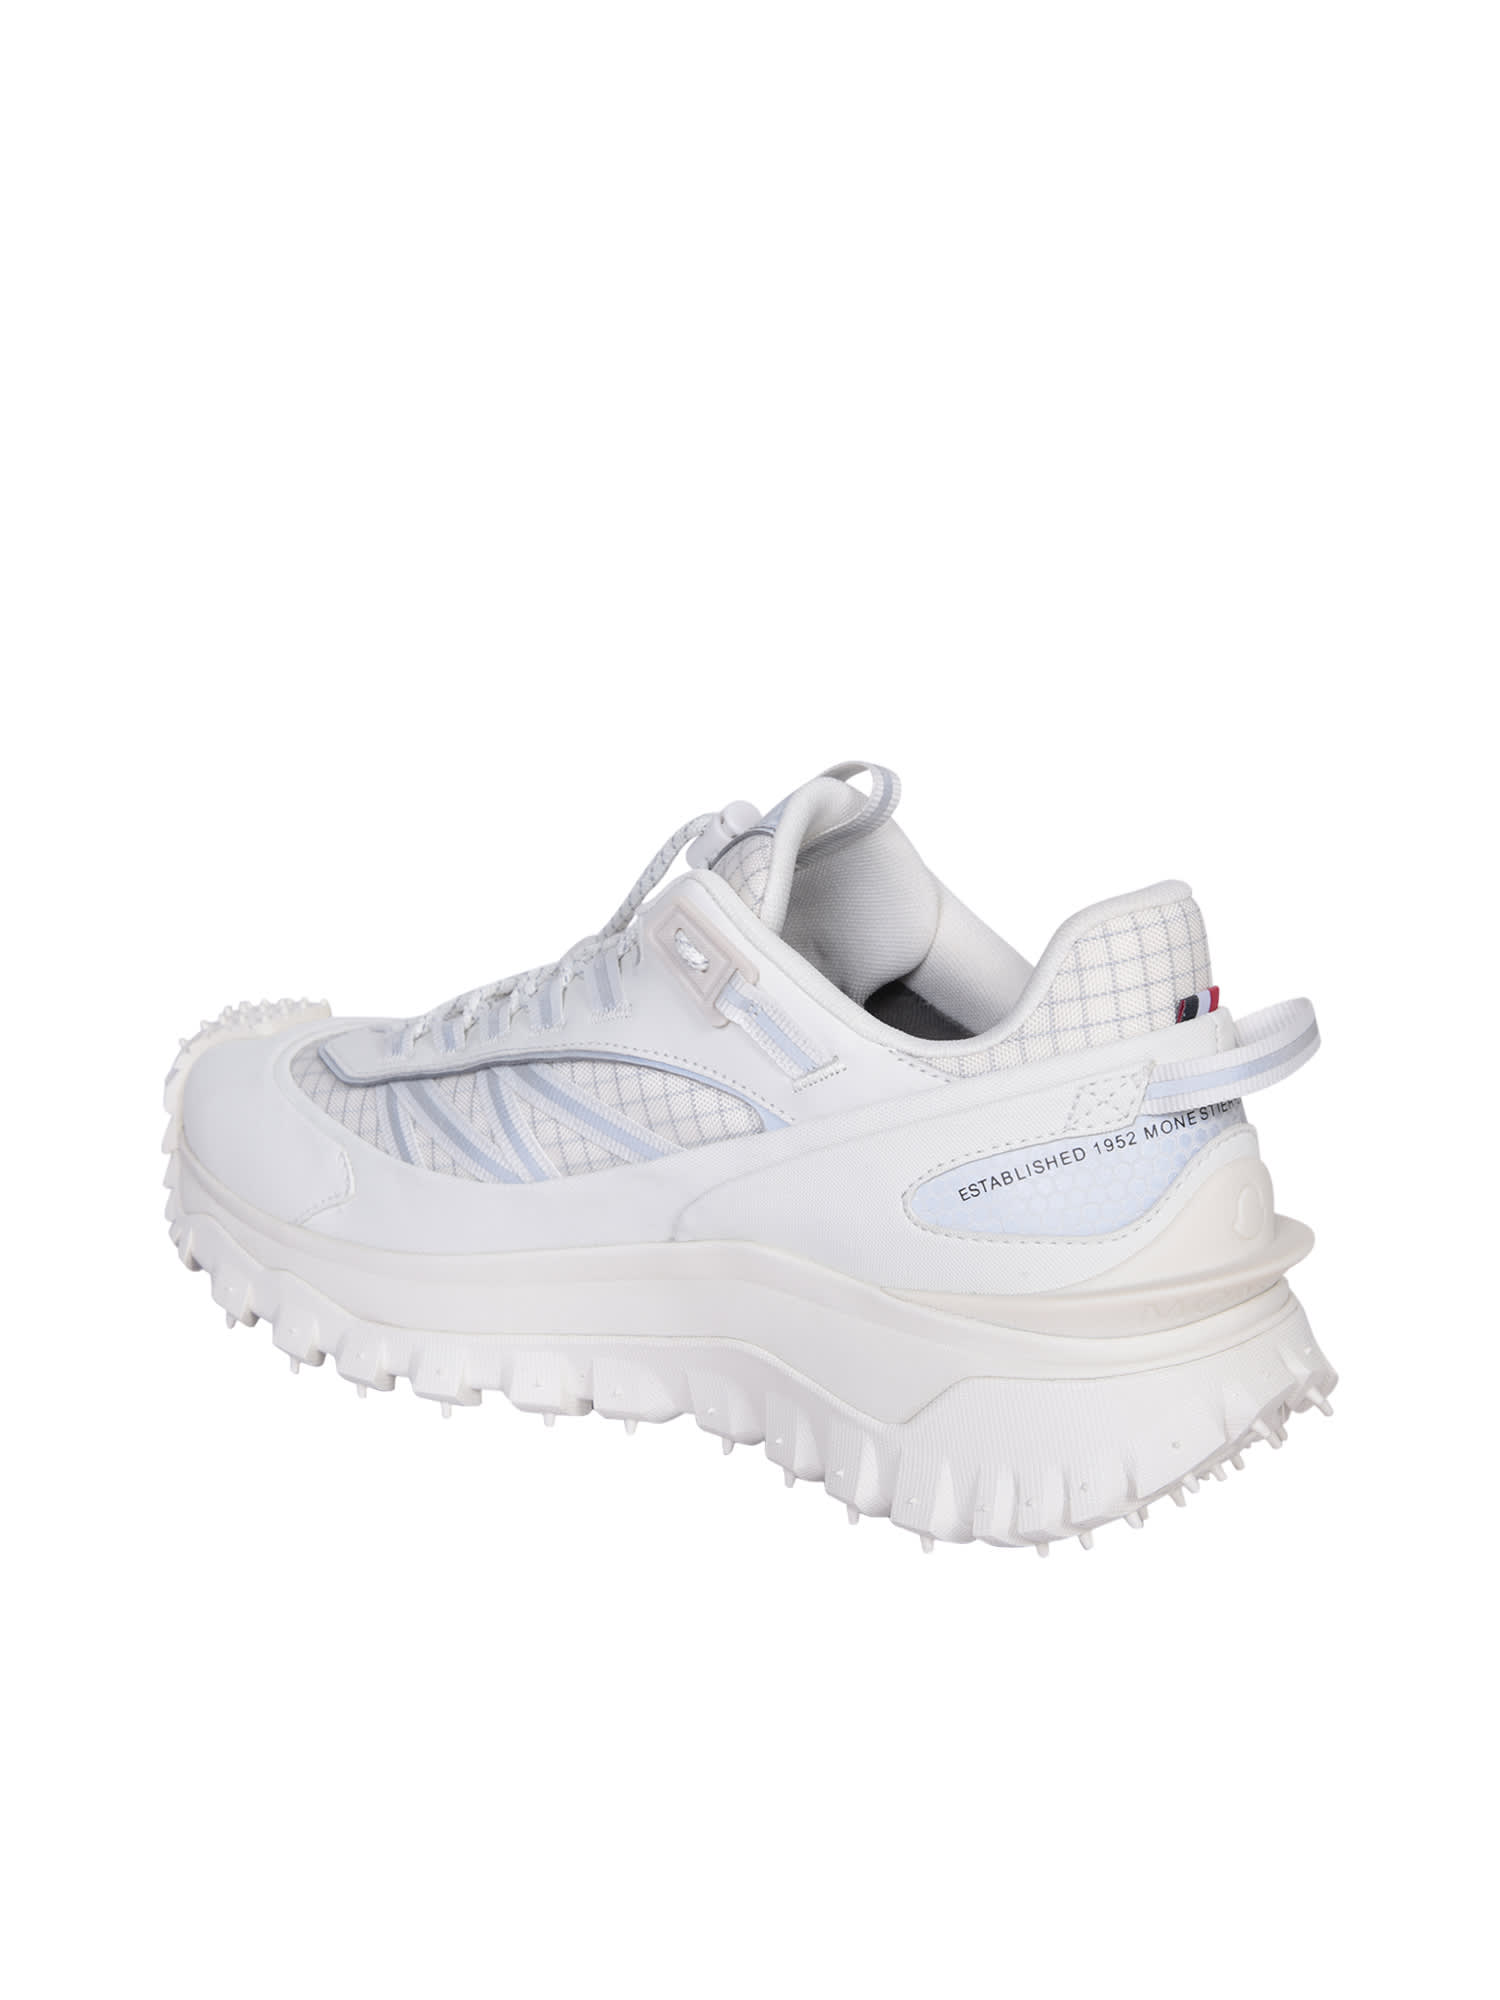 Shop Moncler Trailgrip Gtx Low White Sneakers